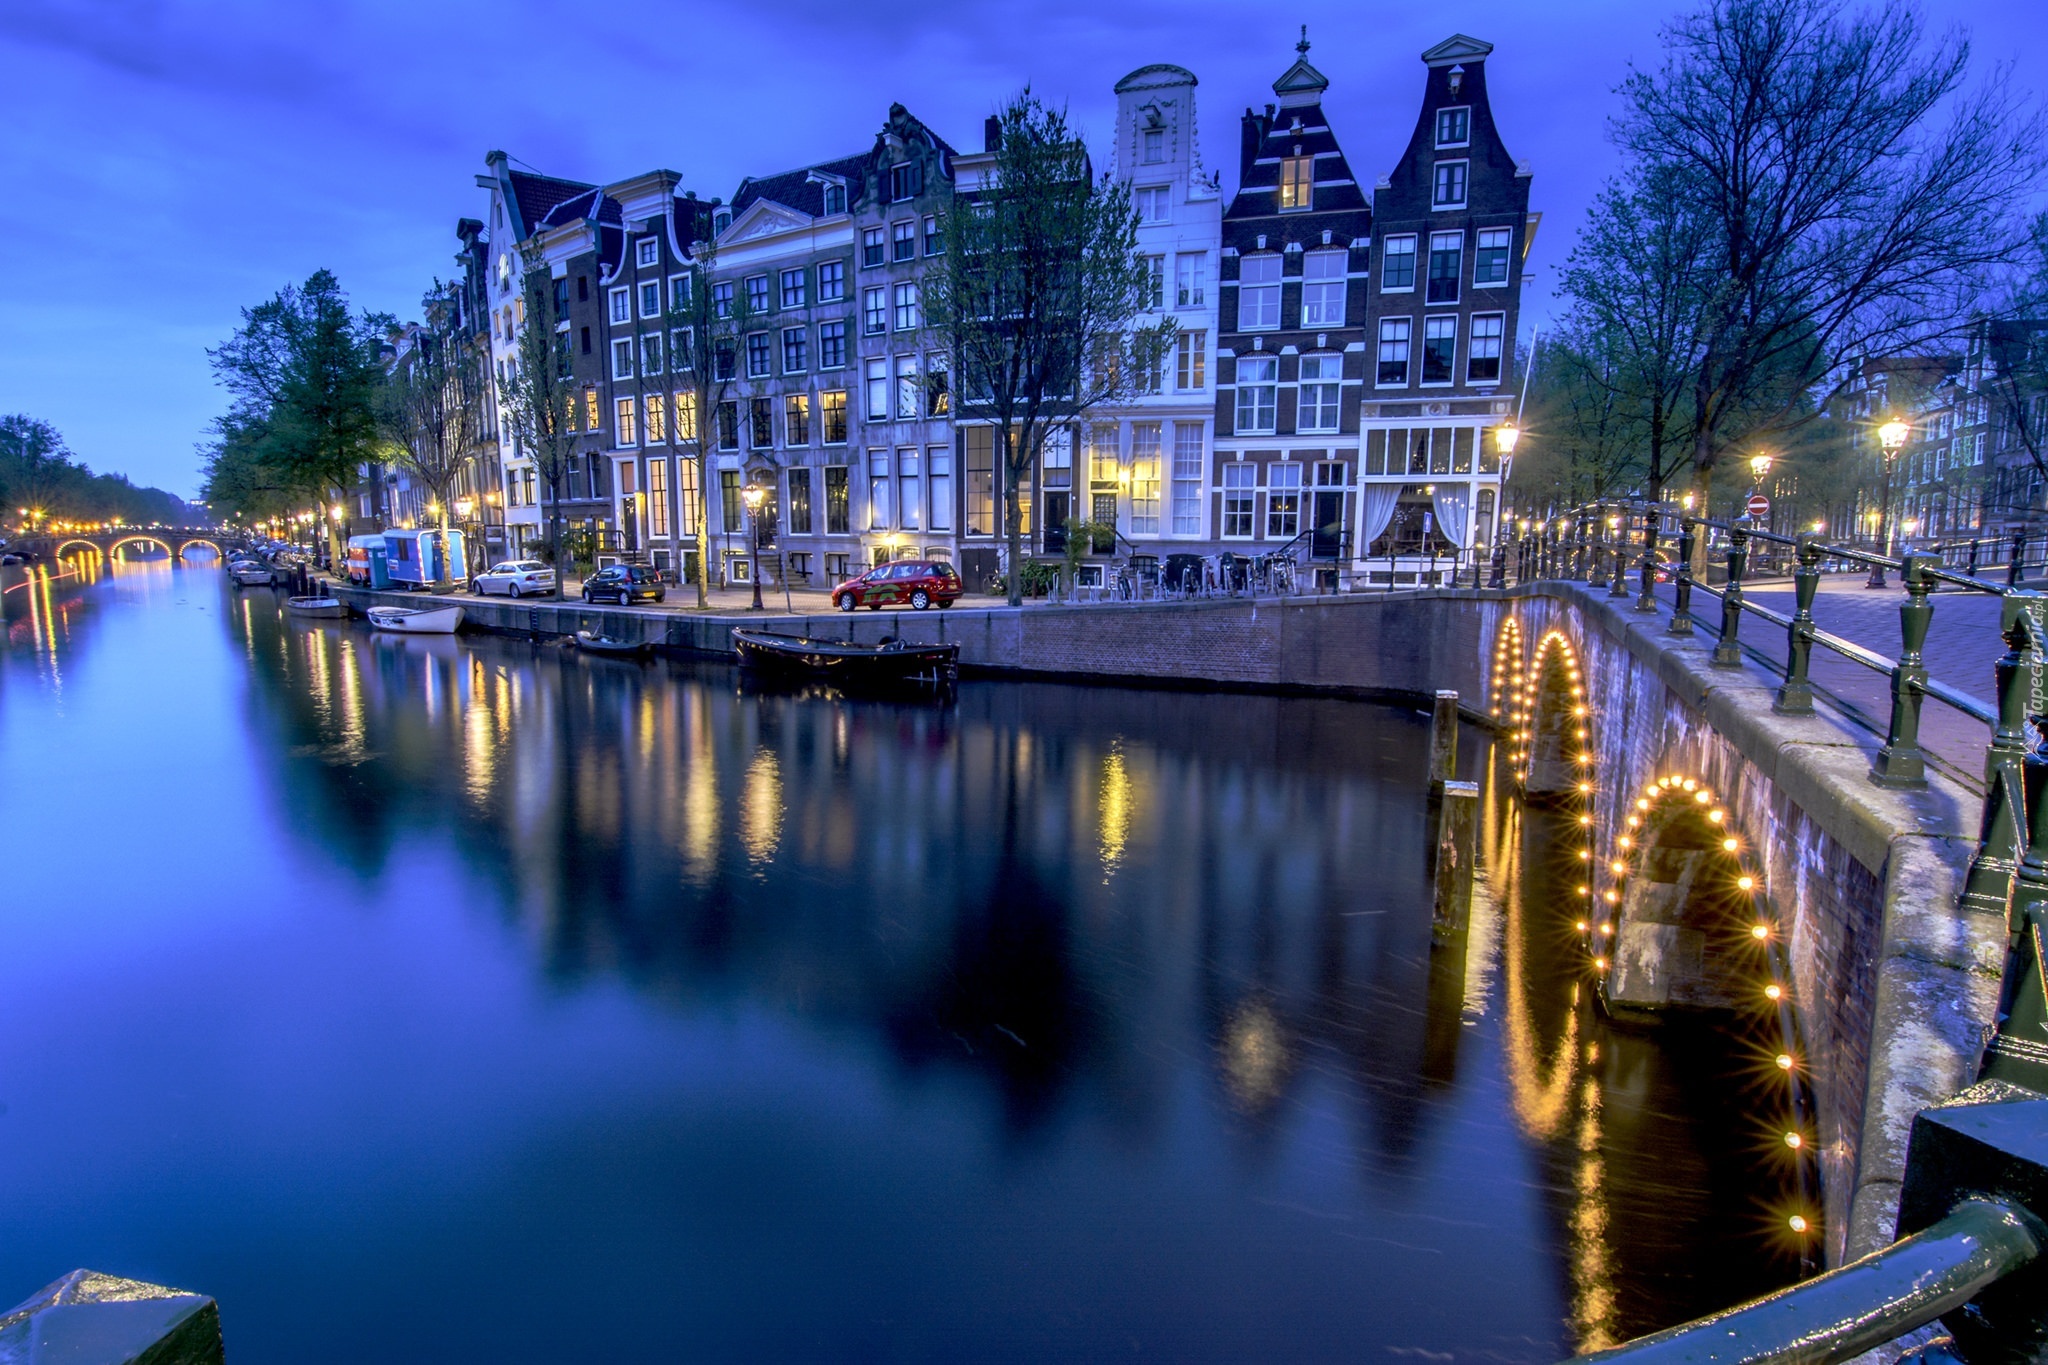 Amsterdam, Kanał, Most, Kamienice